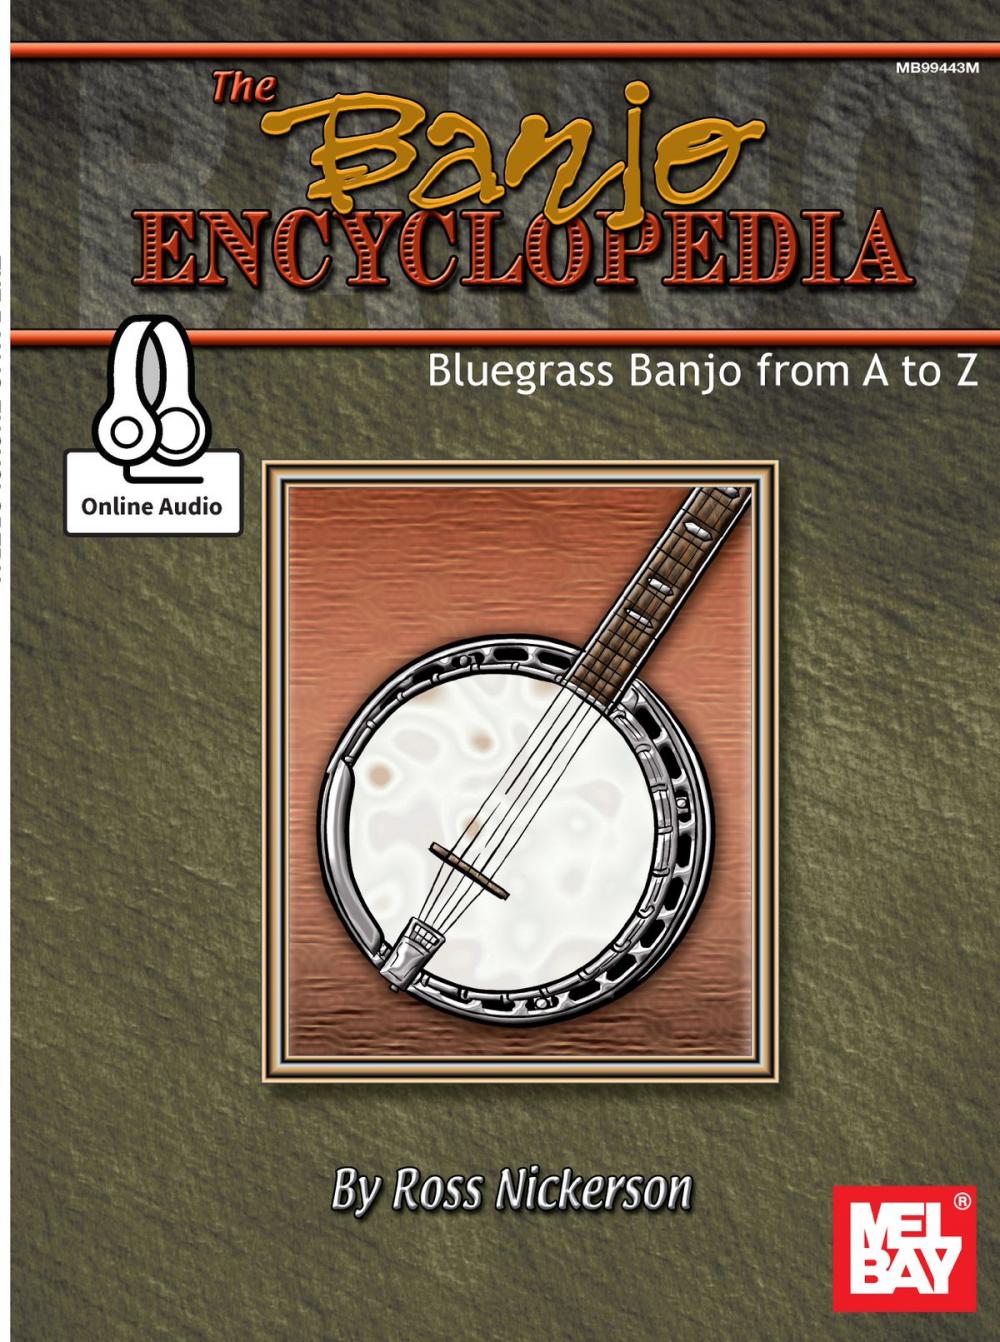 Big bigCover of The Banjo Encyclopedia